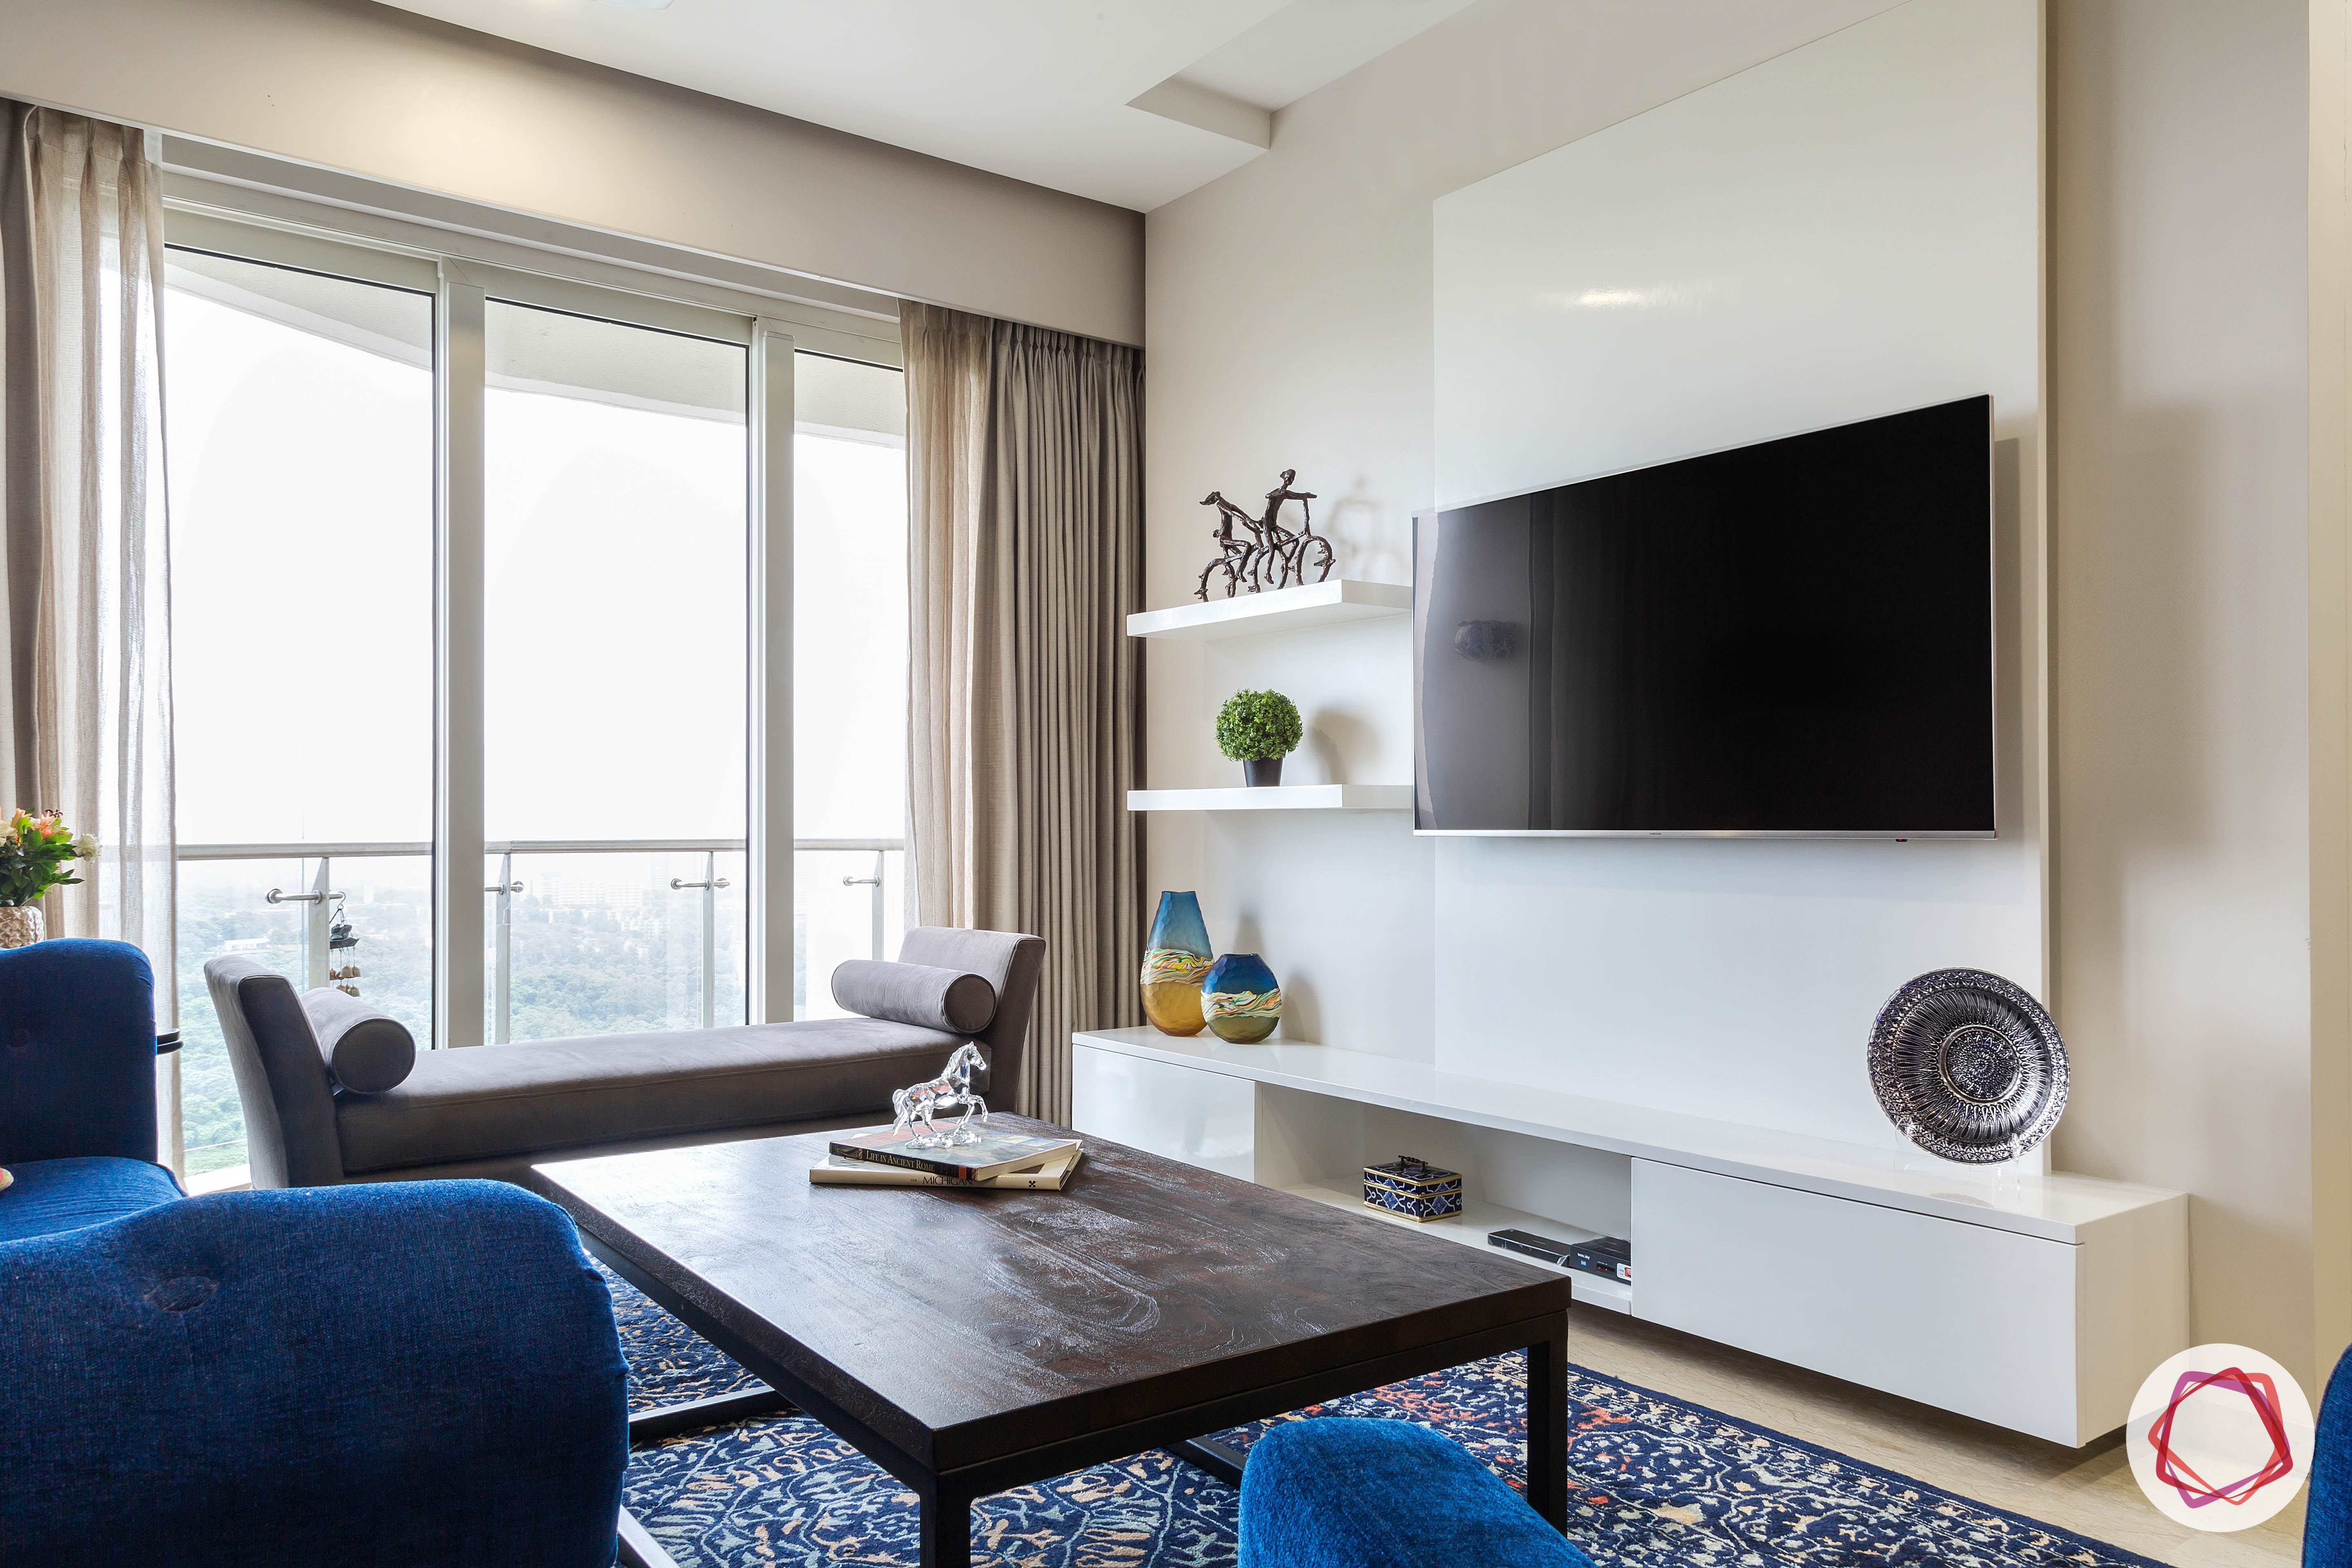 lodha group-living room designs-media wall designs-tv cabinet designs for living room